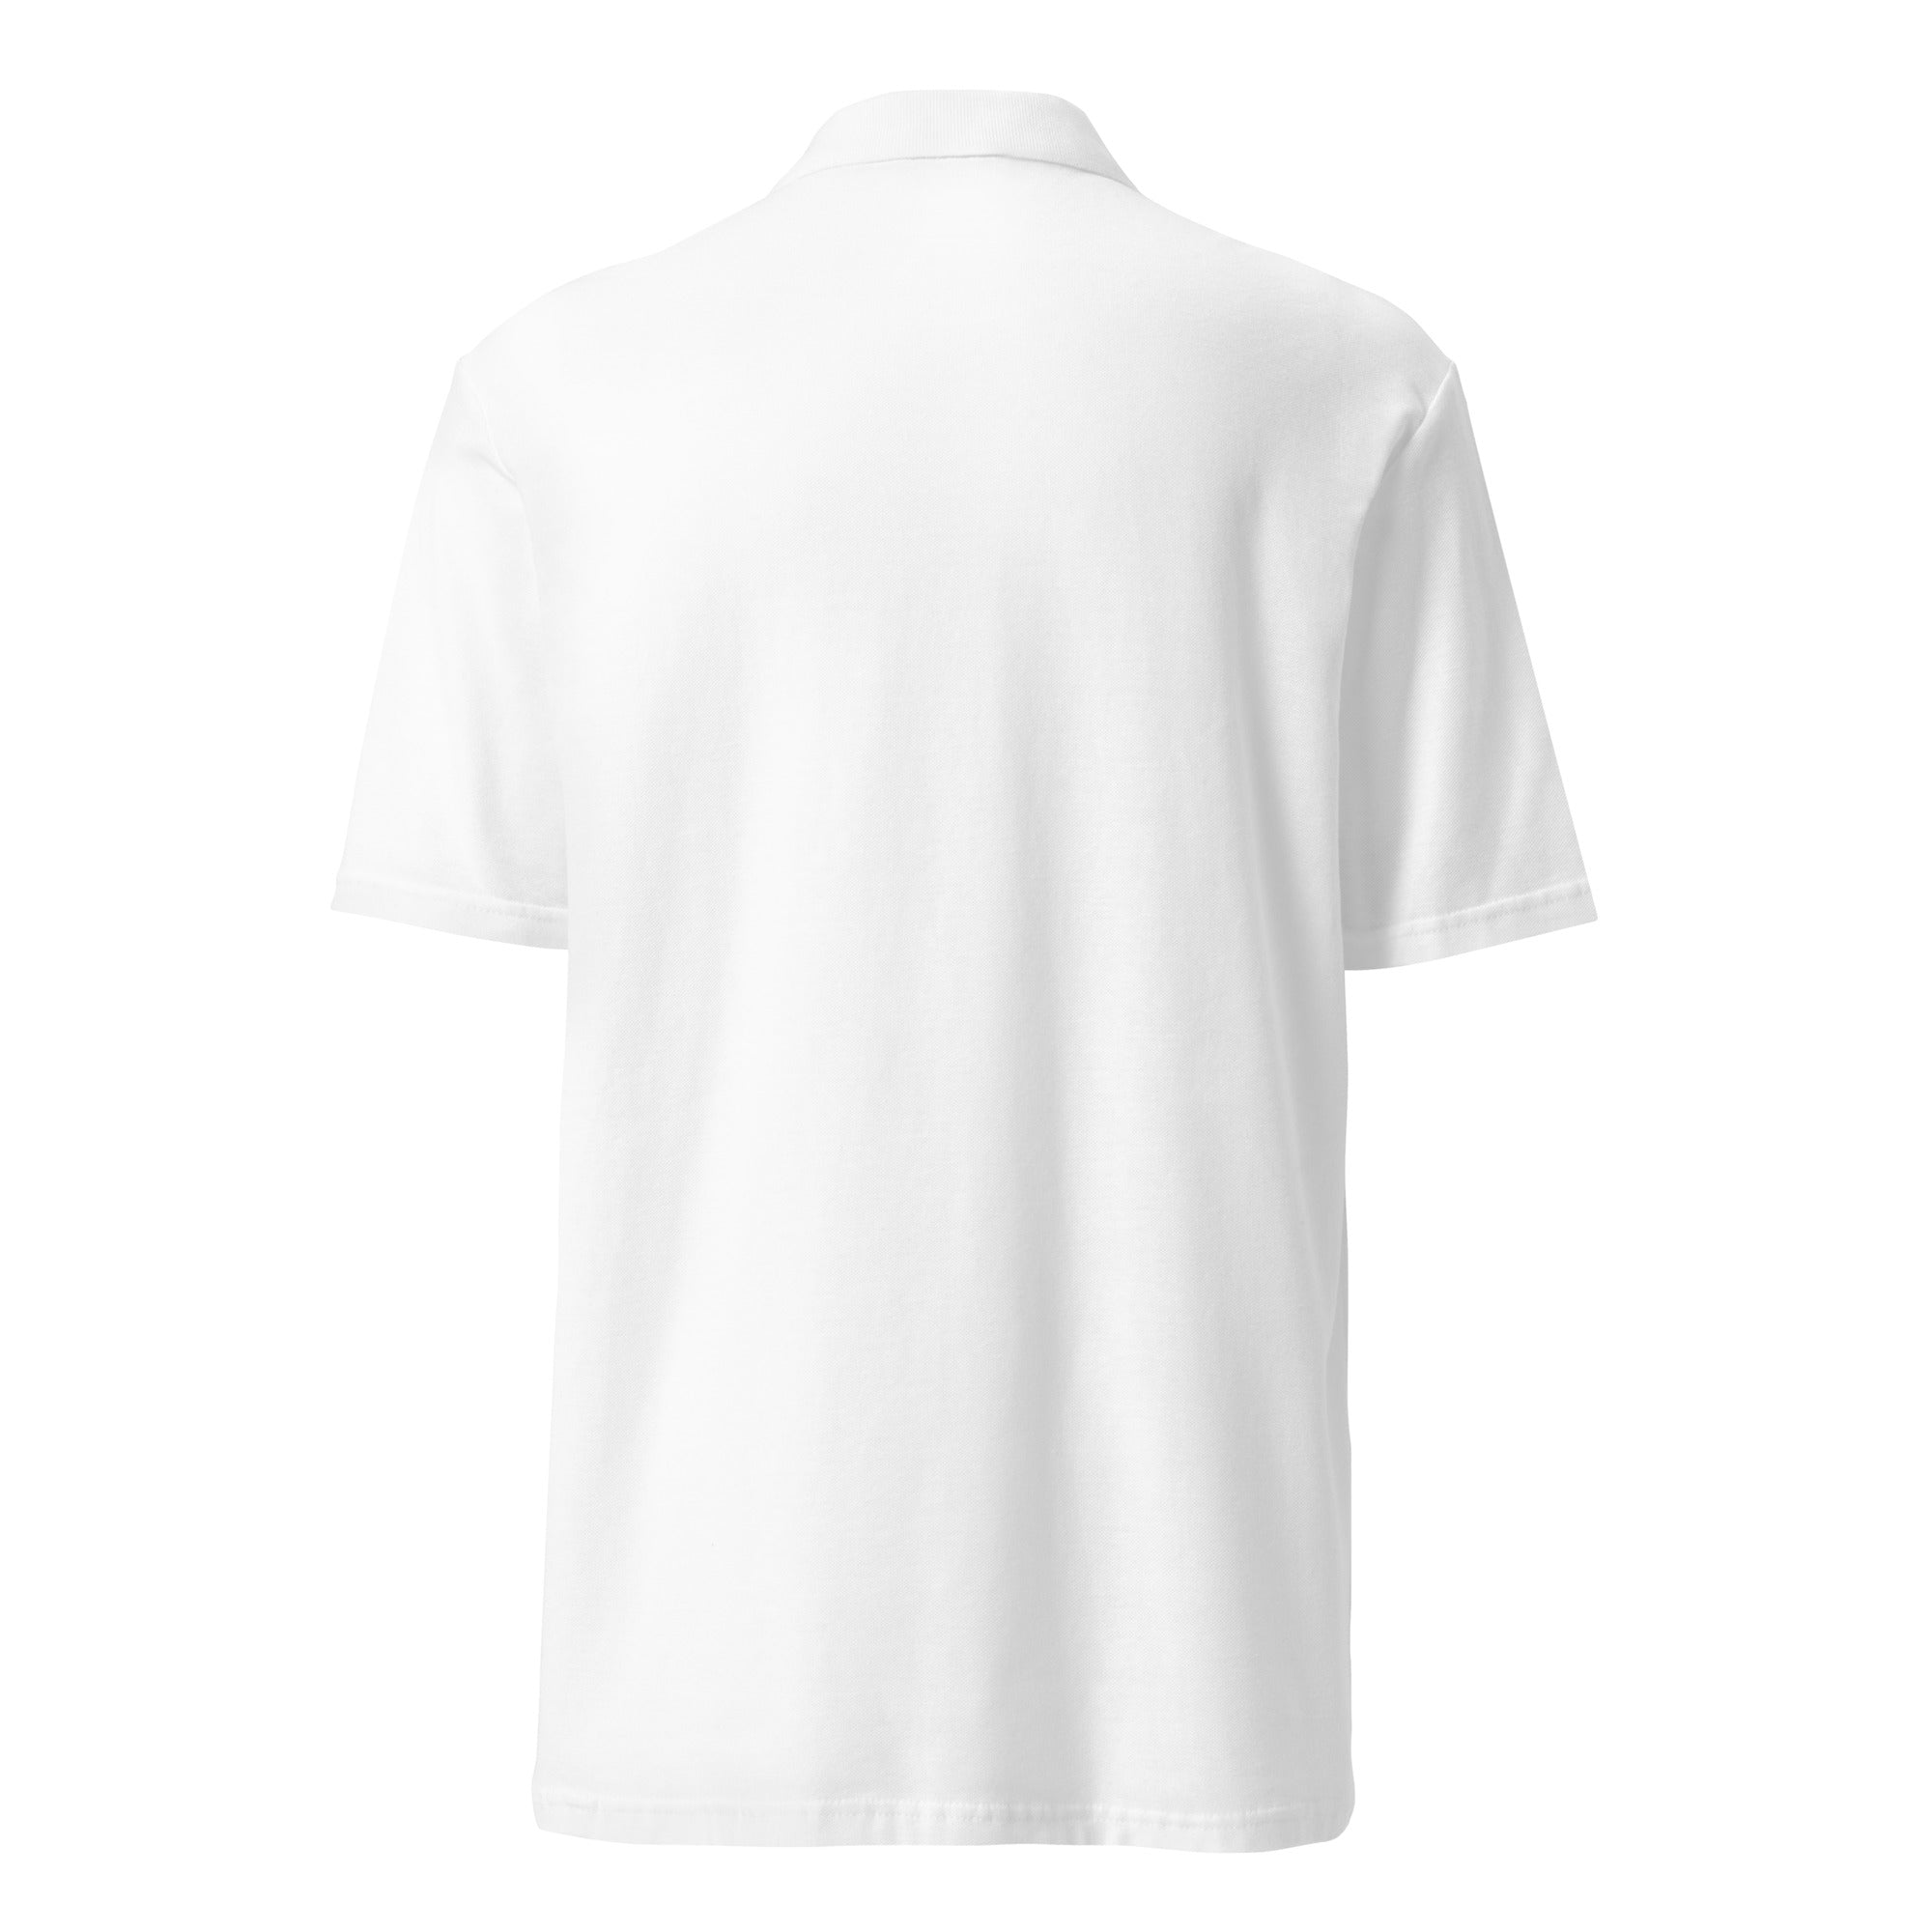 Hyperion Racing Unisex pique polo shirt white